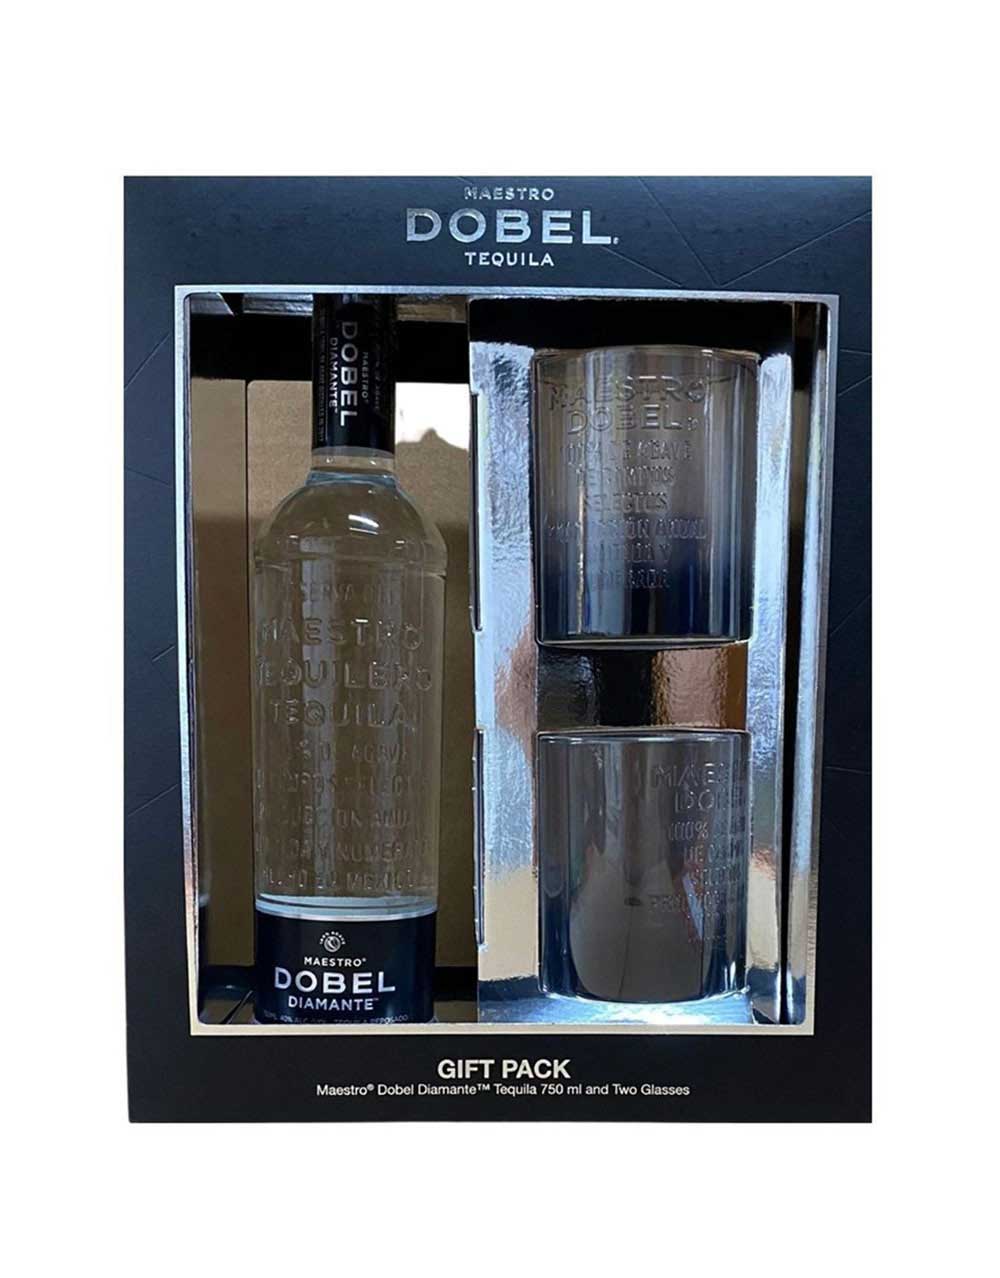 Maestro Dobel Diamante Reposado Tequila with two glasses Gift Pack